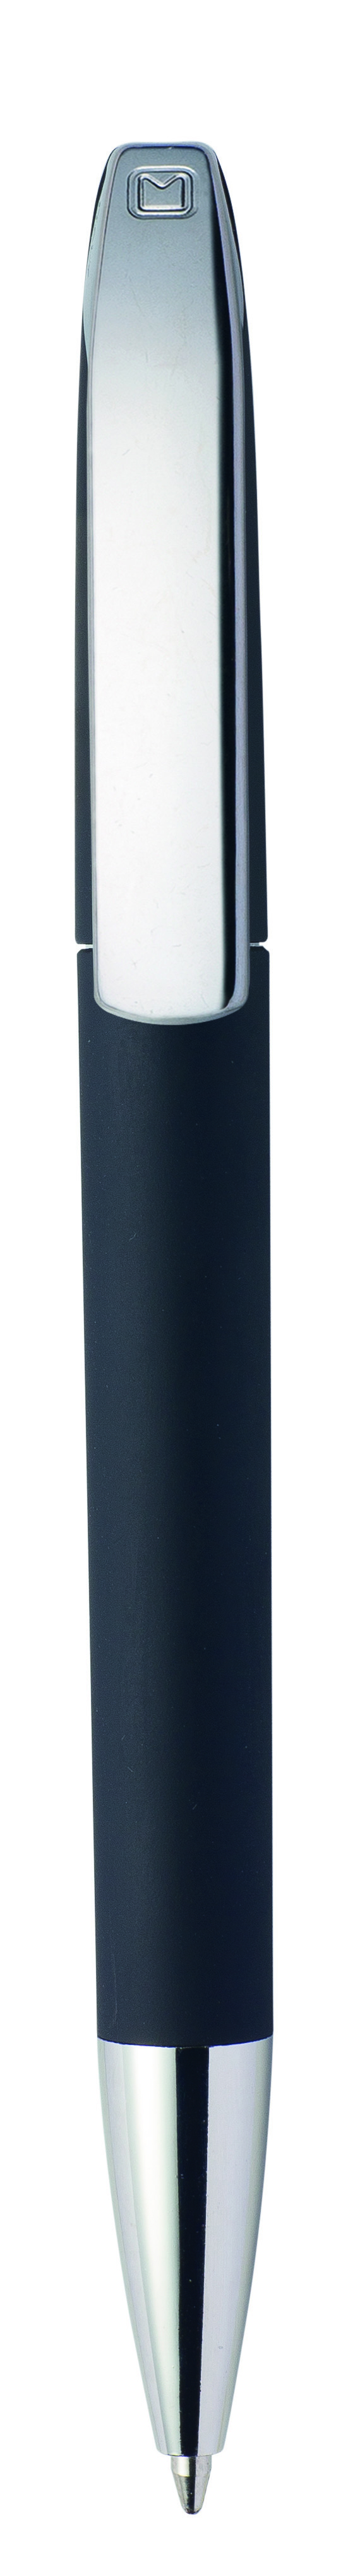 Ручка шариковая VIEW, черный, покрытие soft touch, пластик/металл